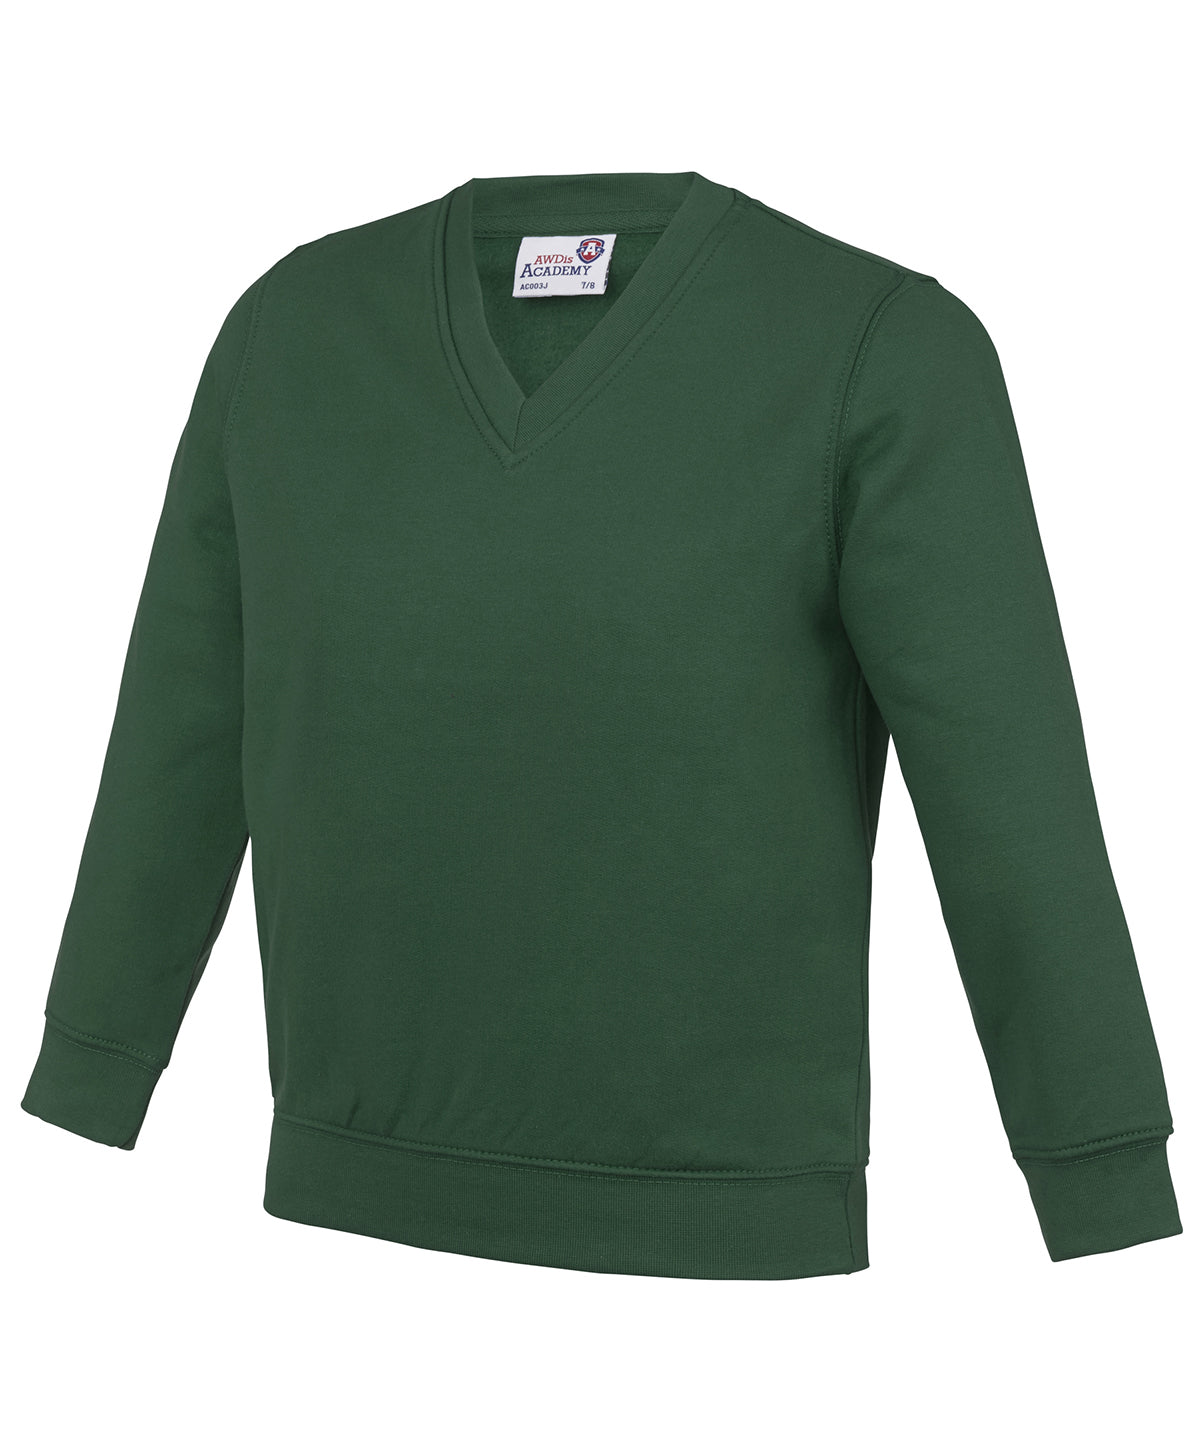 Personalised Sweatshirts - Black AWDis Academy Kids Academy v-neck sweatshirt